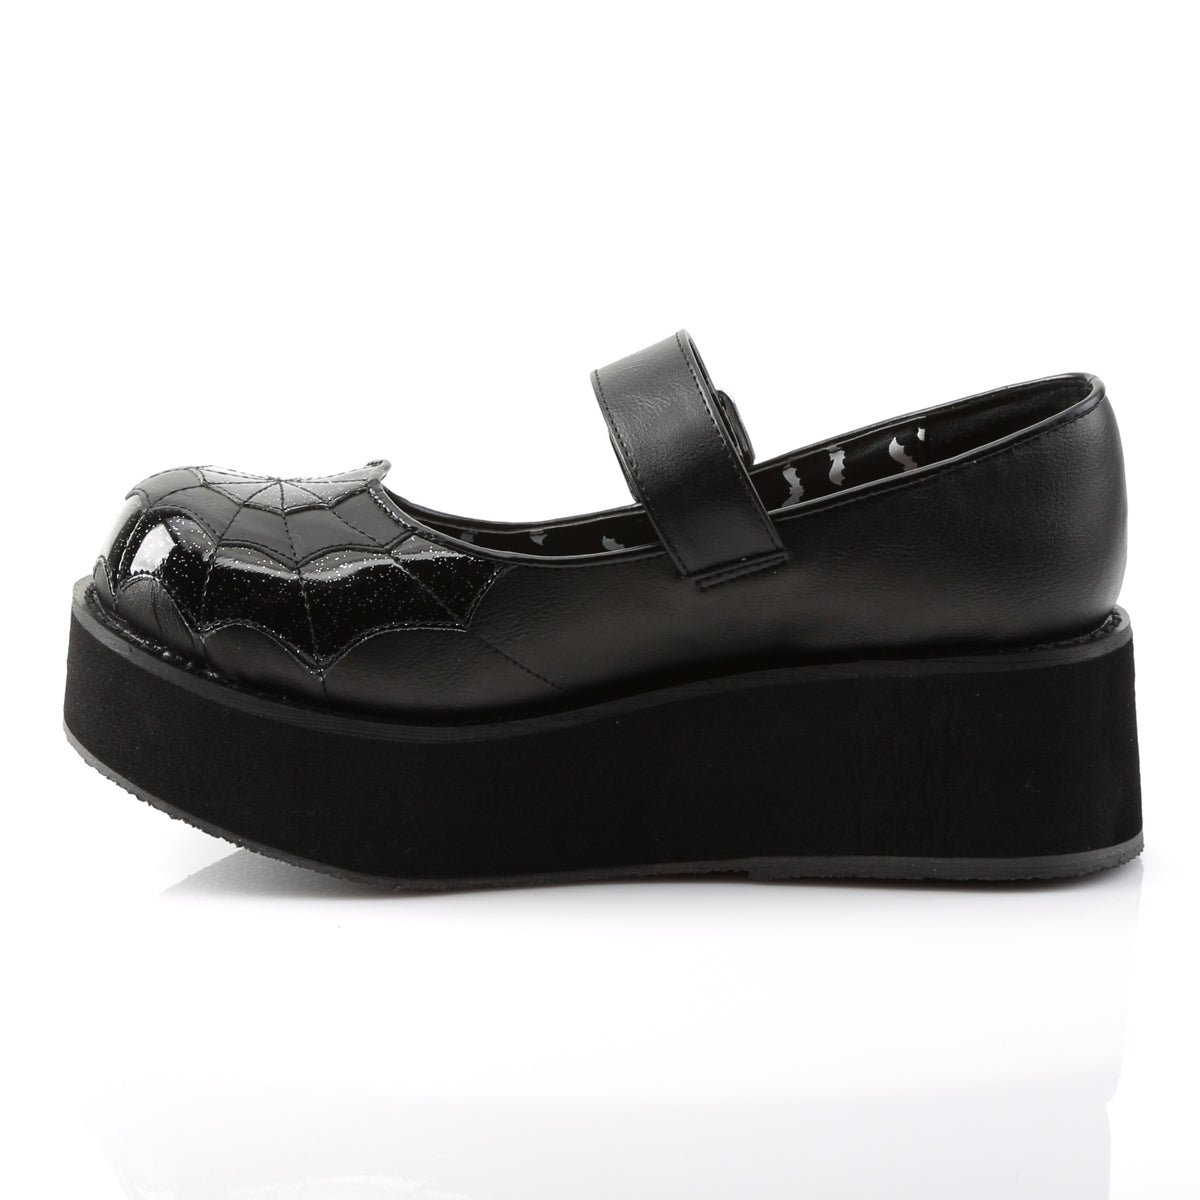 SPRITE-05 Demonia Black Vegan Leather-Black Patent Women's Heels & Platform Shoes [Demonia Cult Alternative Footwear]